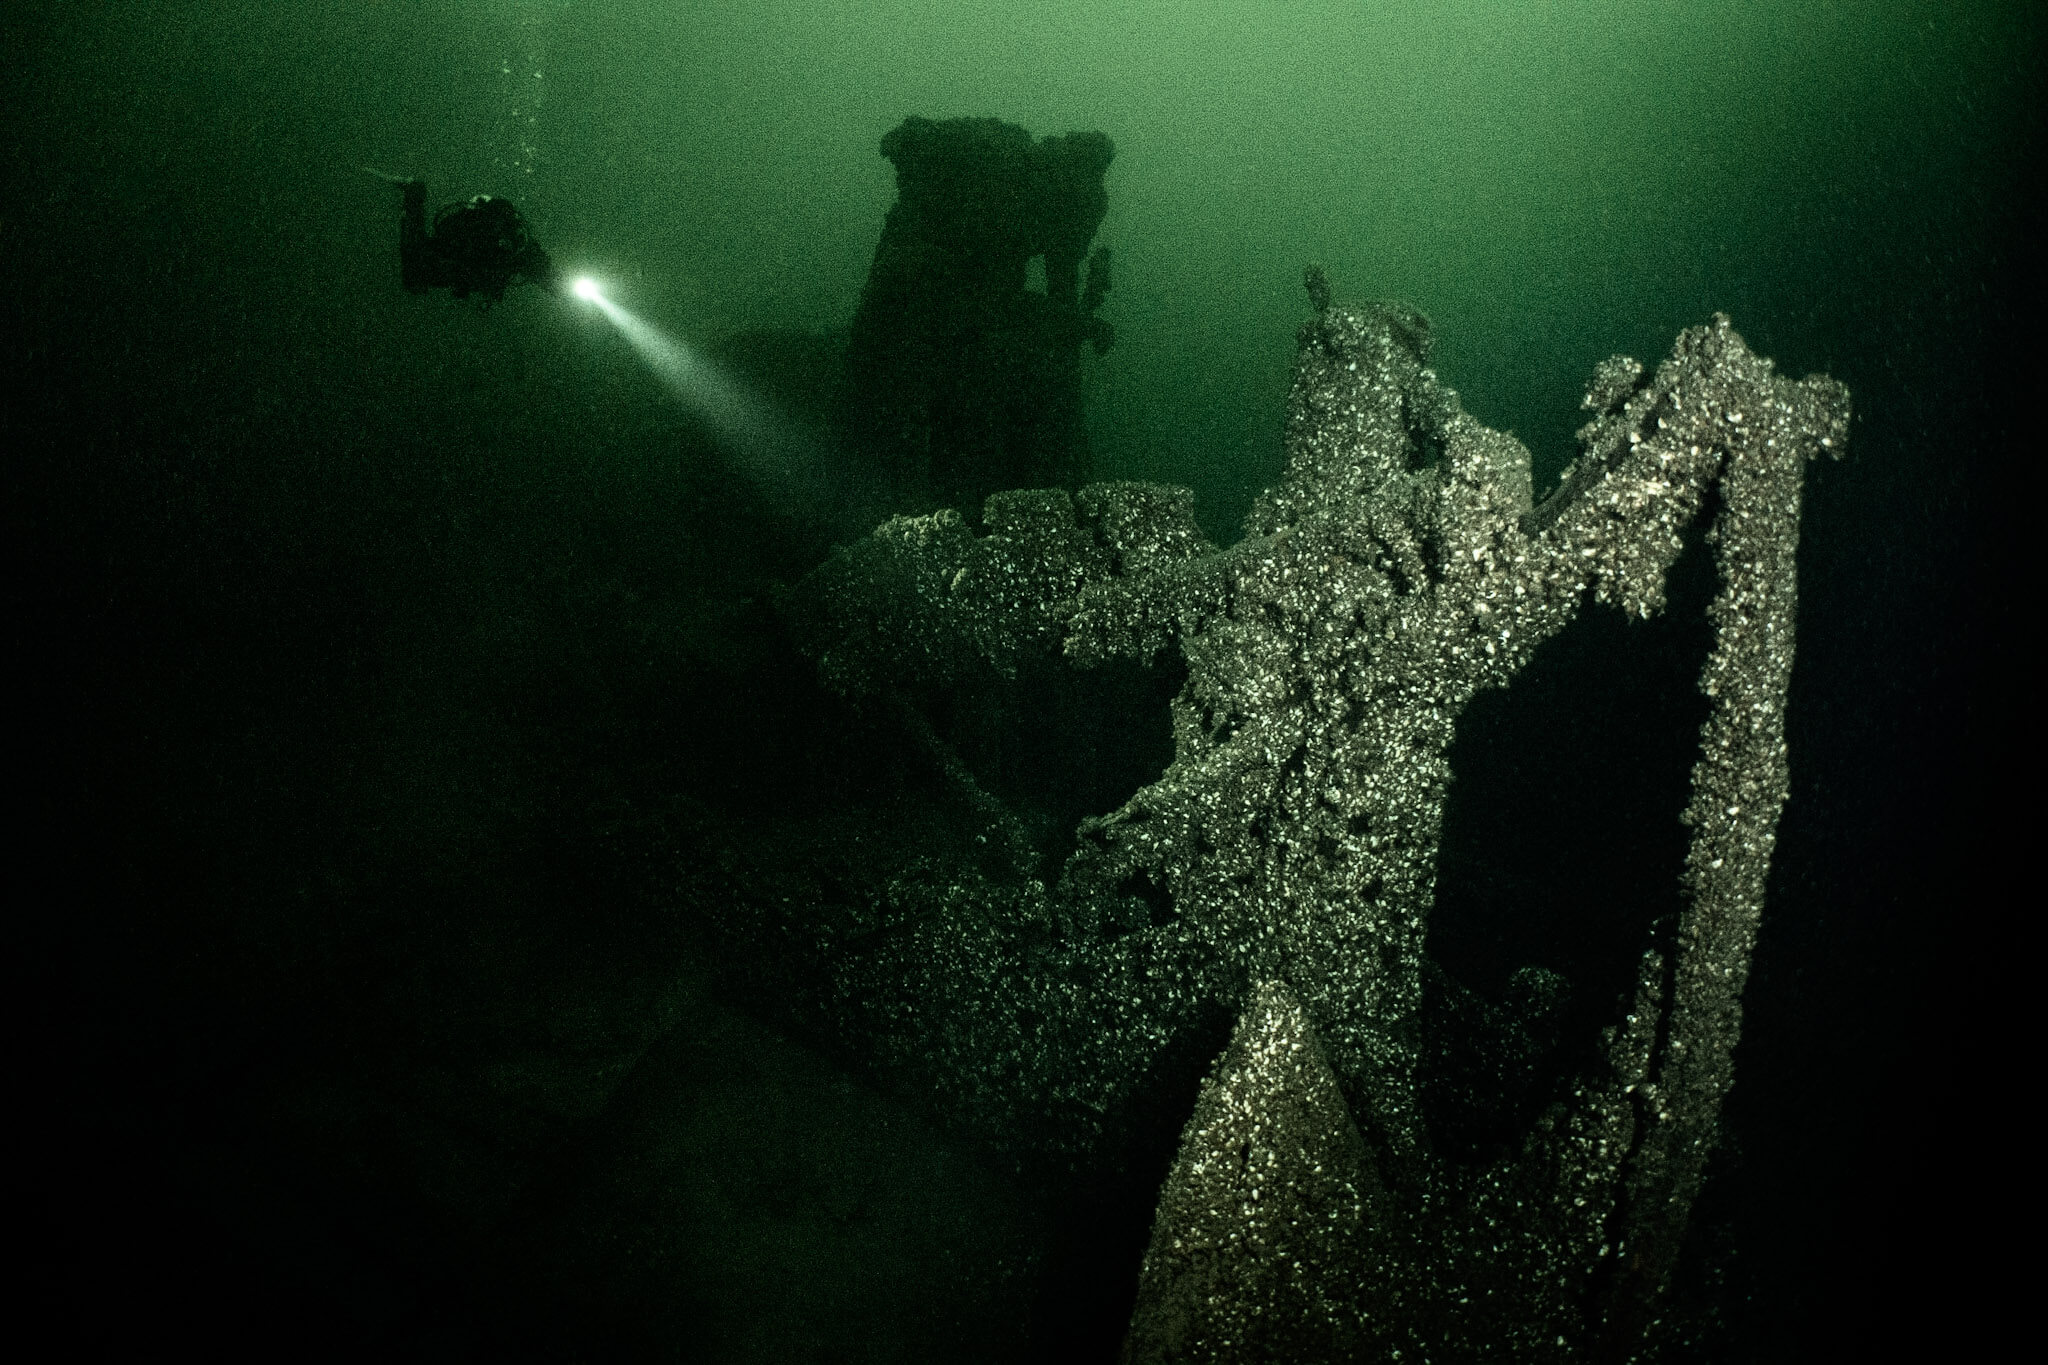 Exploring the China shipwreck in Lake Ontario